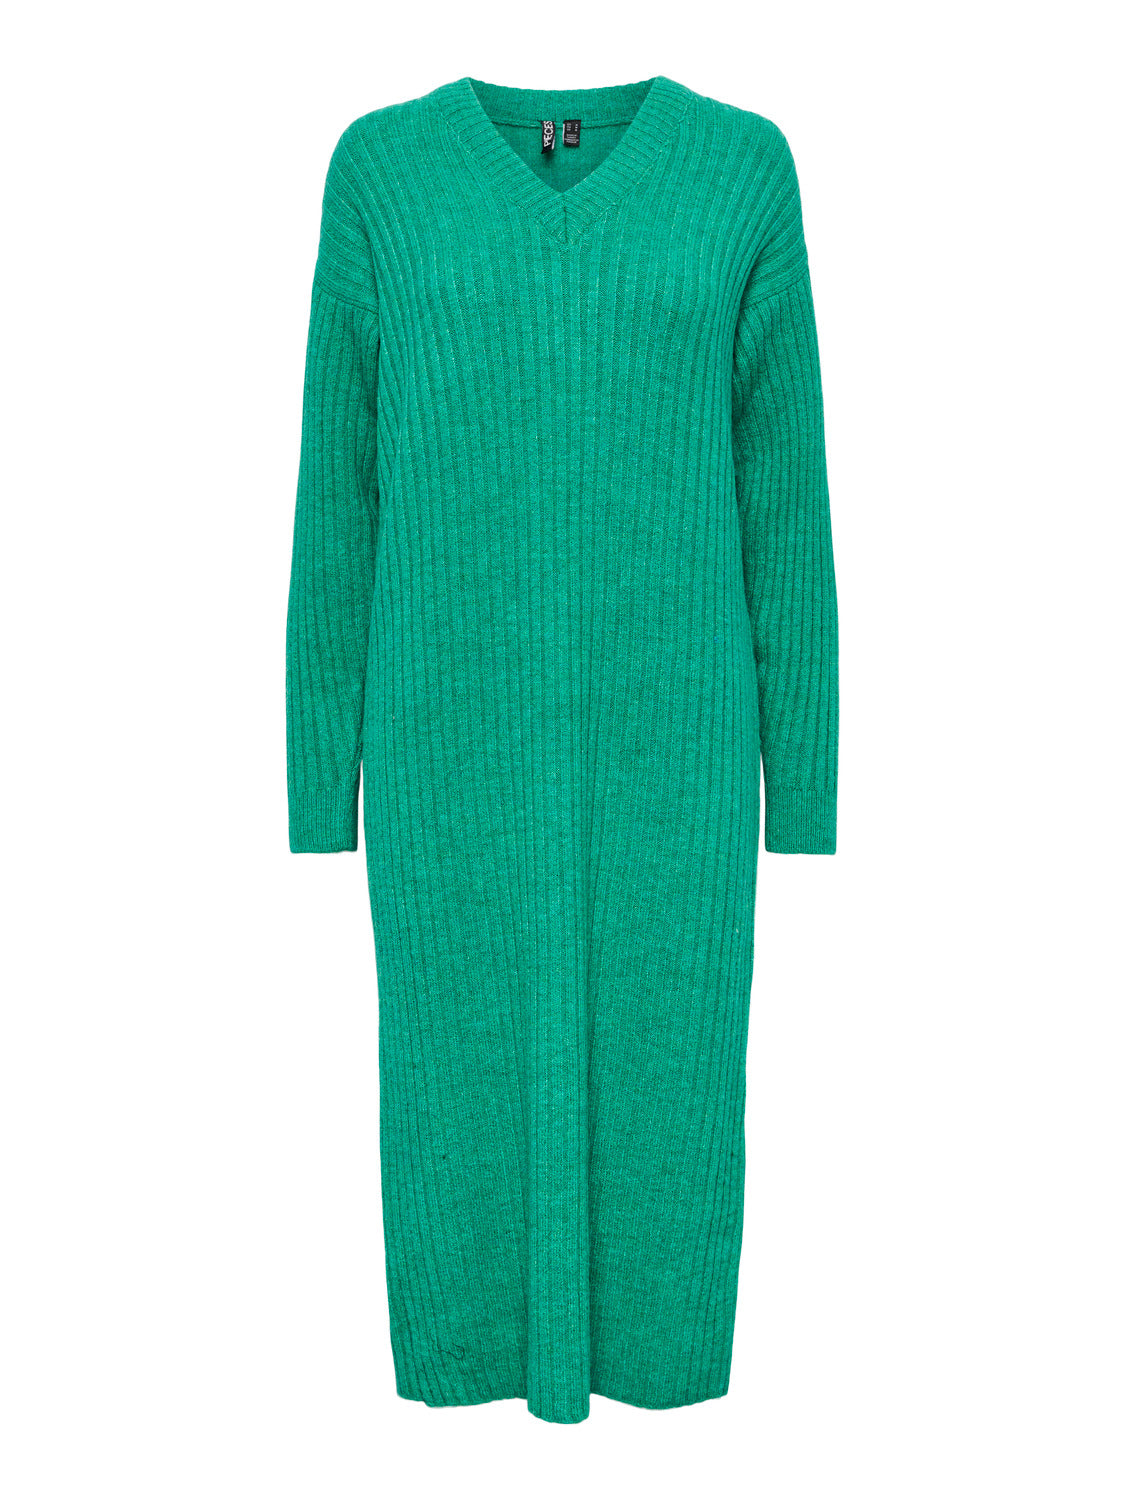 PCSILLA Dress - Simply Green